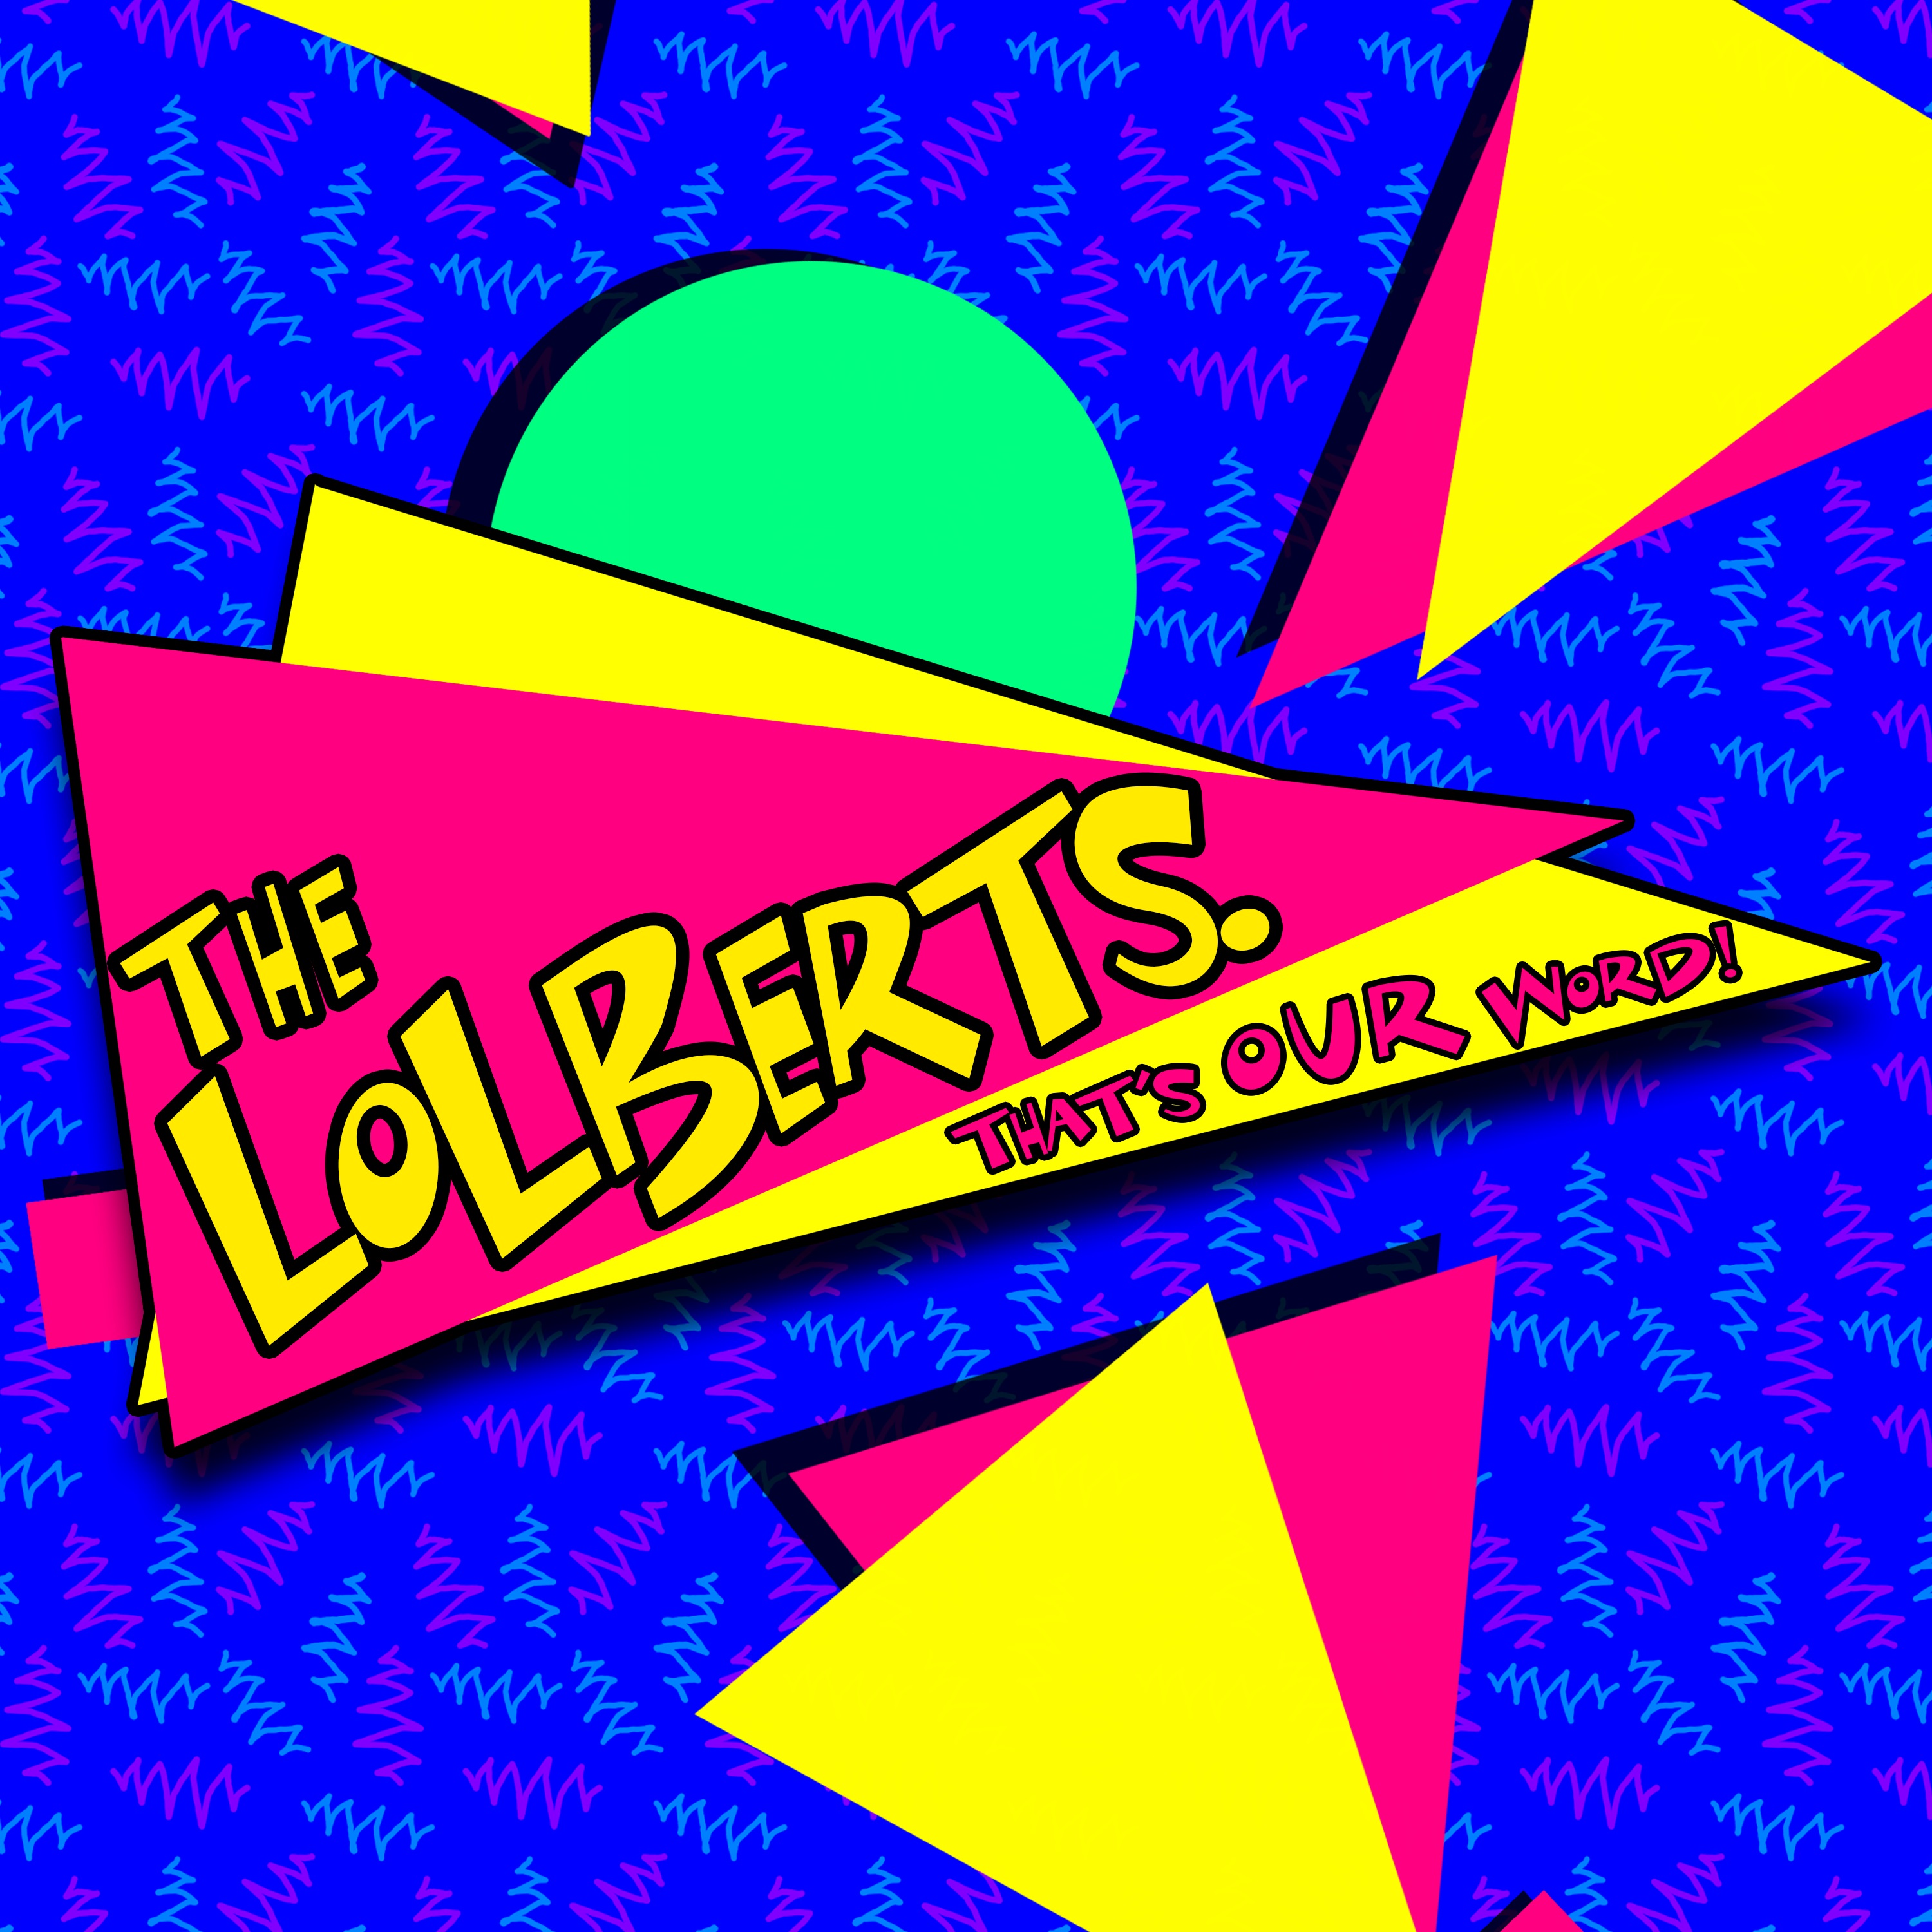 The Lolberts